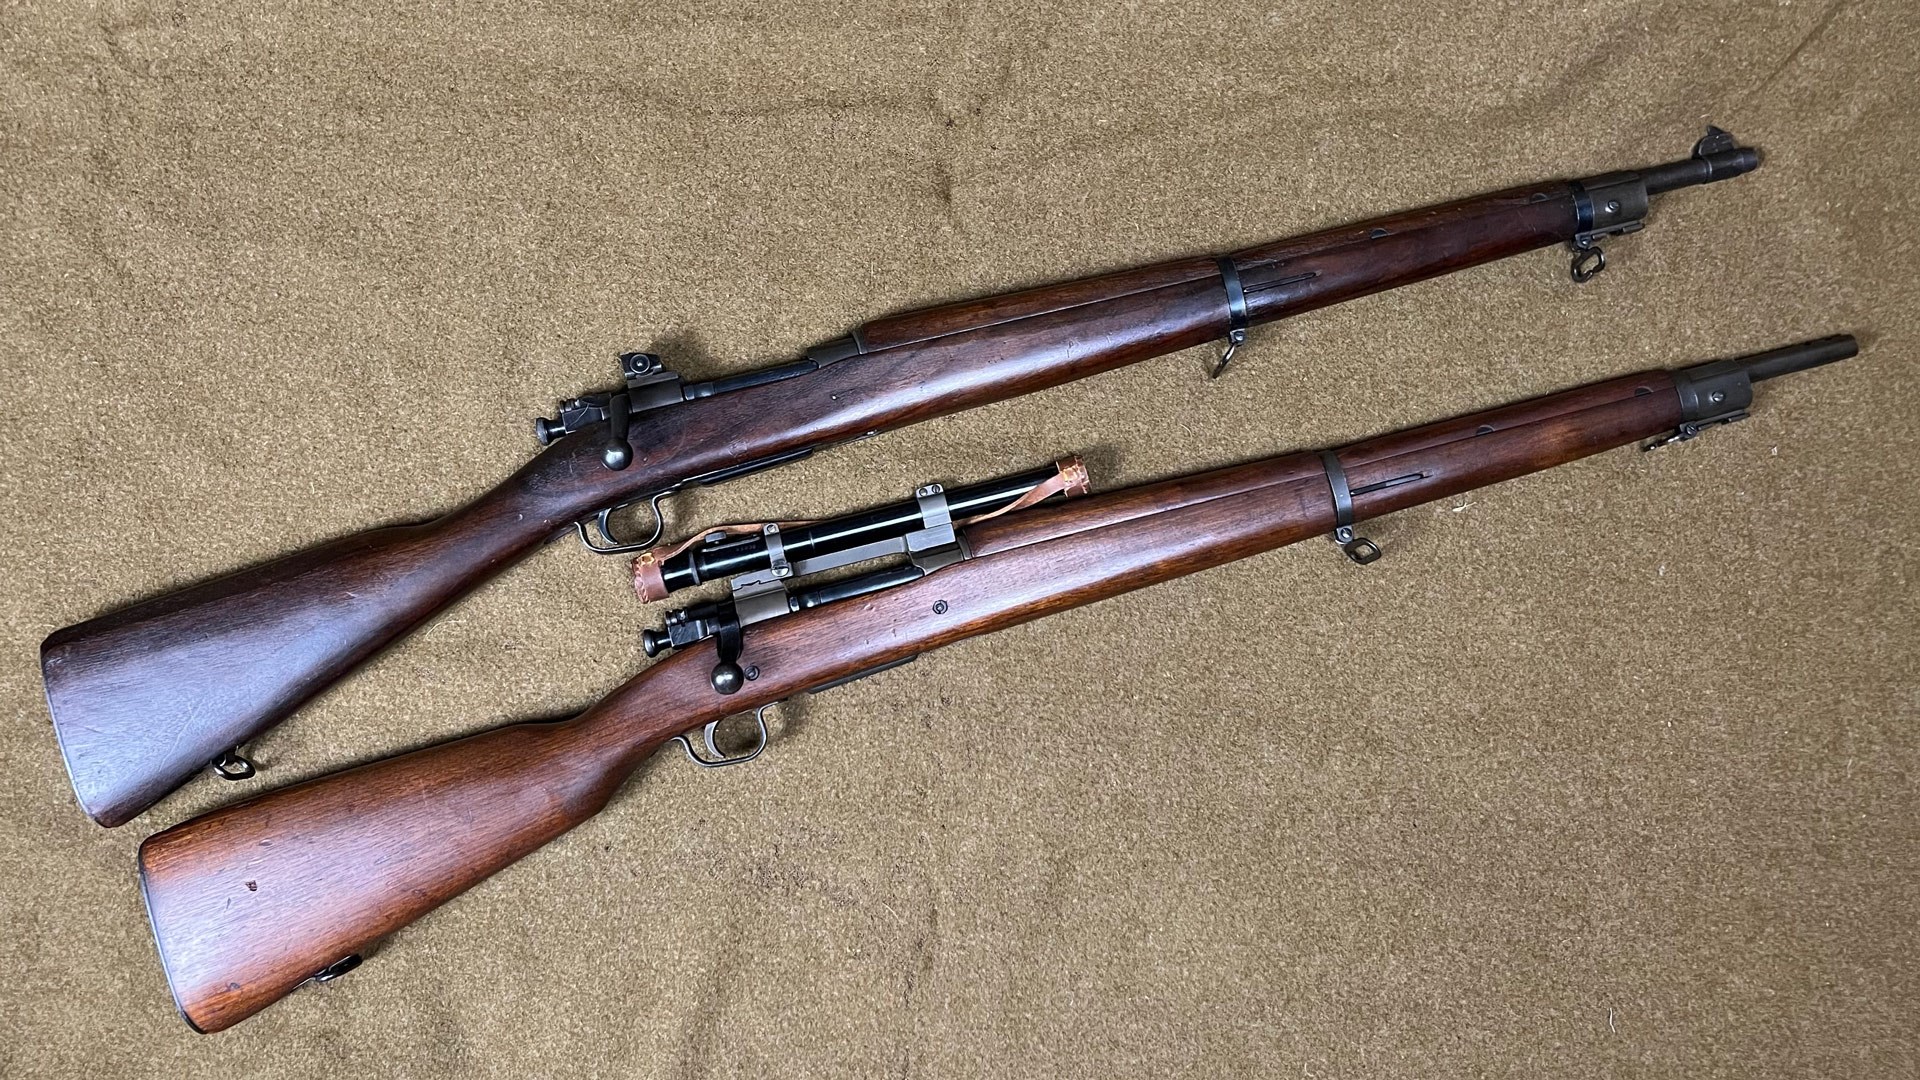 Comparison between two wood-stocked M1903 military surplus rifles on wool blanket